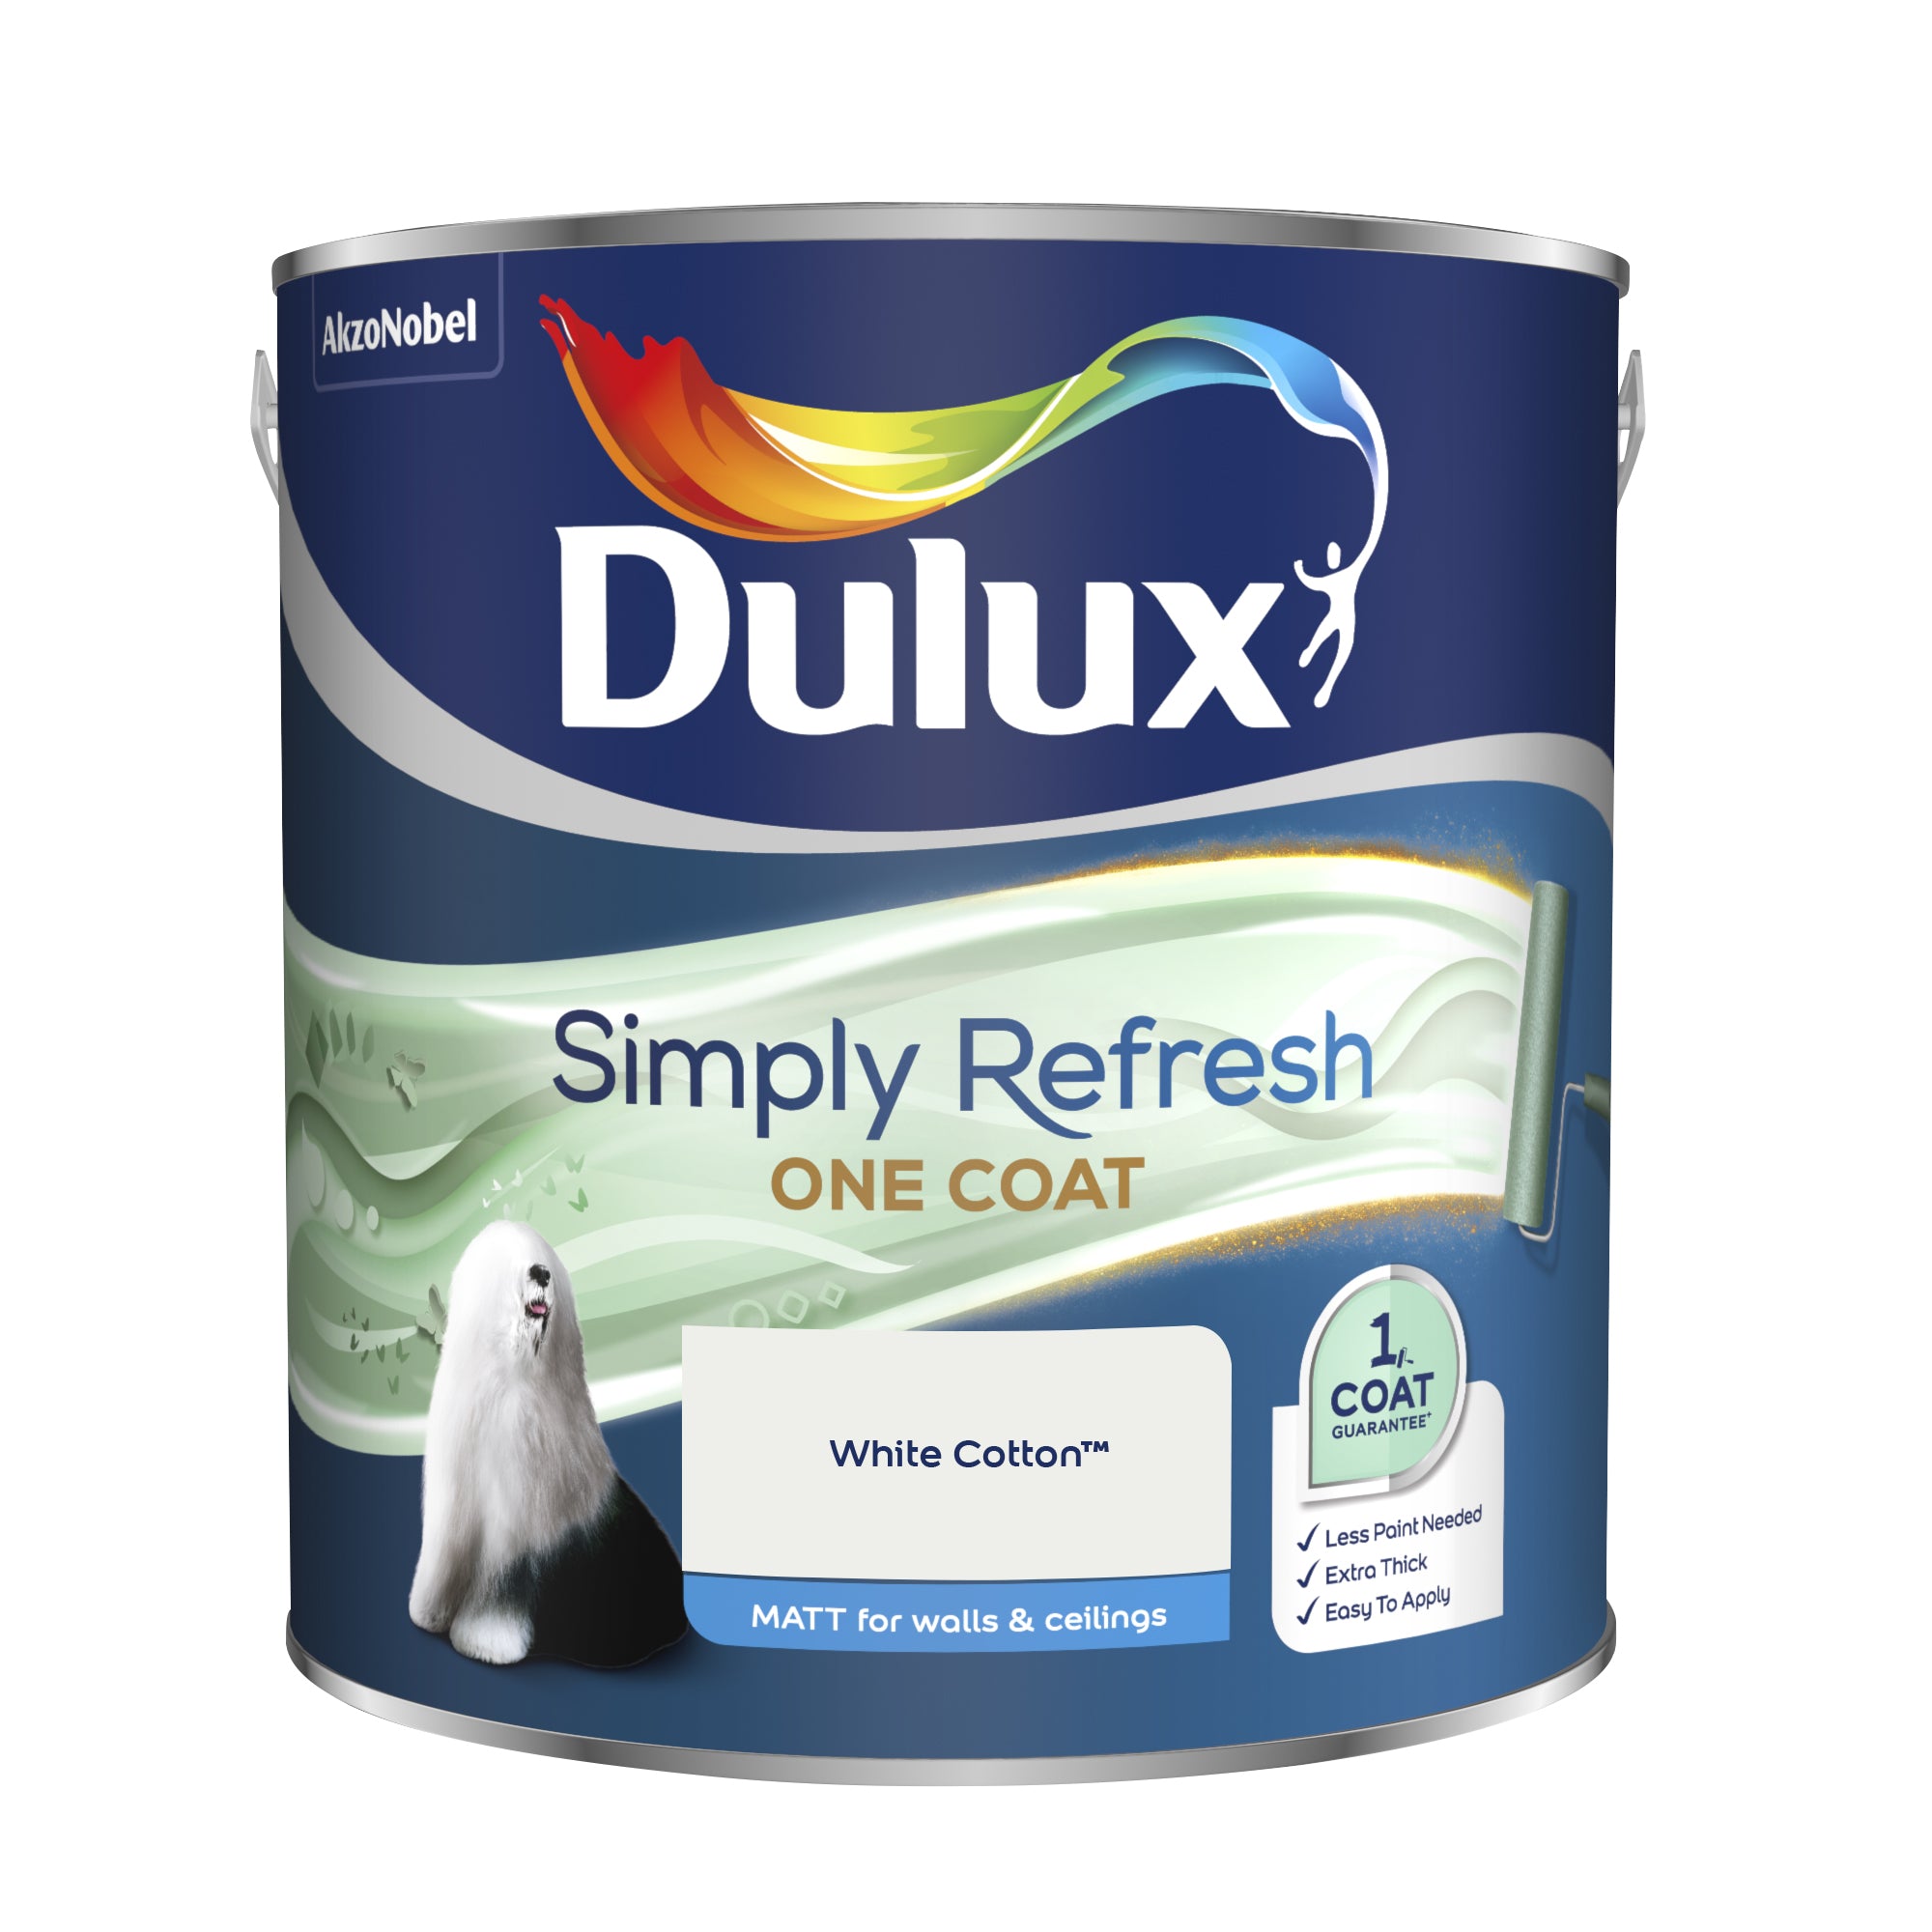 Dulux Simply Refresh One Coat Matt White Cotton 2.5L